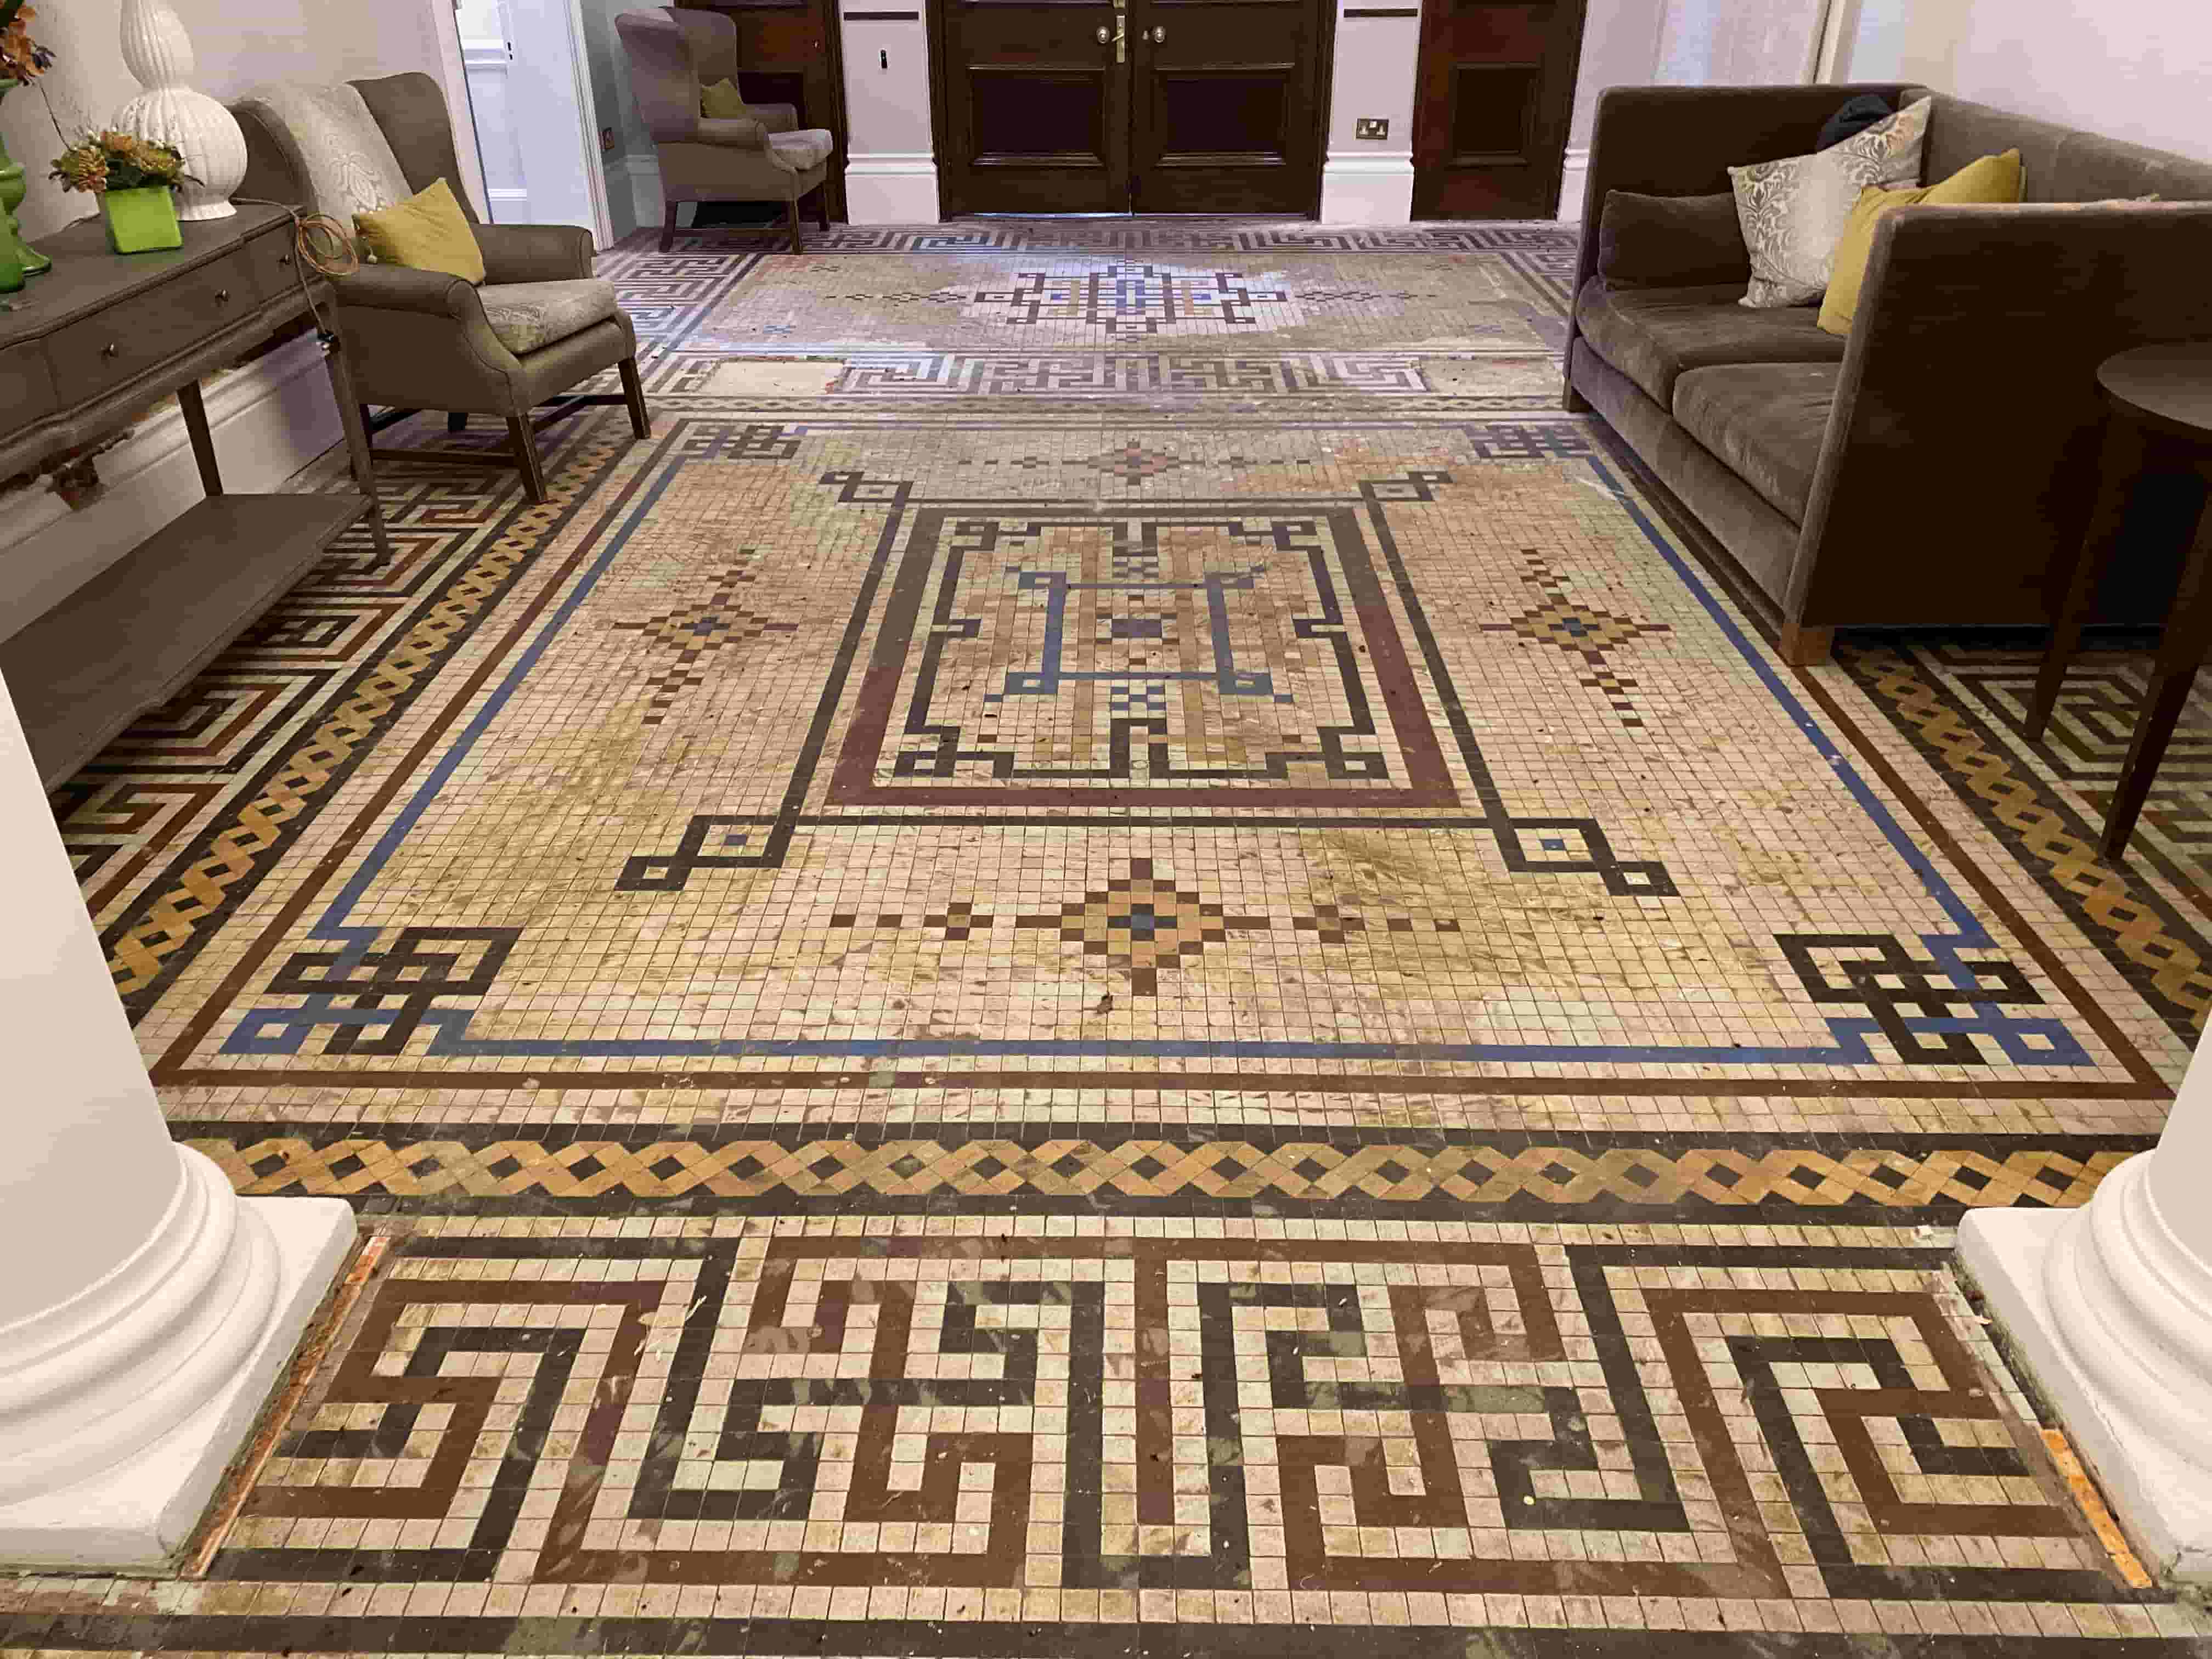 Hotel Tesserae Stone Mosaic Tiled Floor Before Renovation Taplow